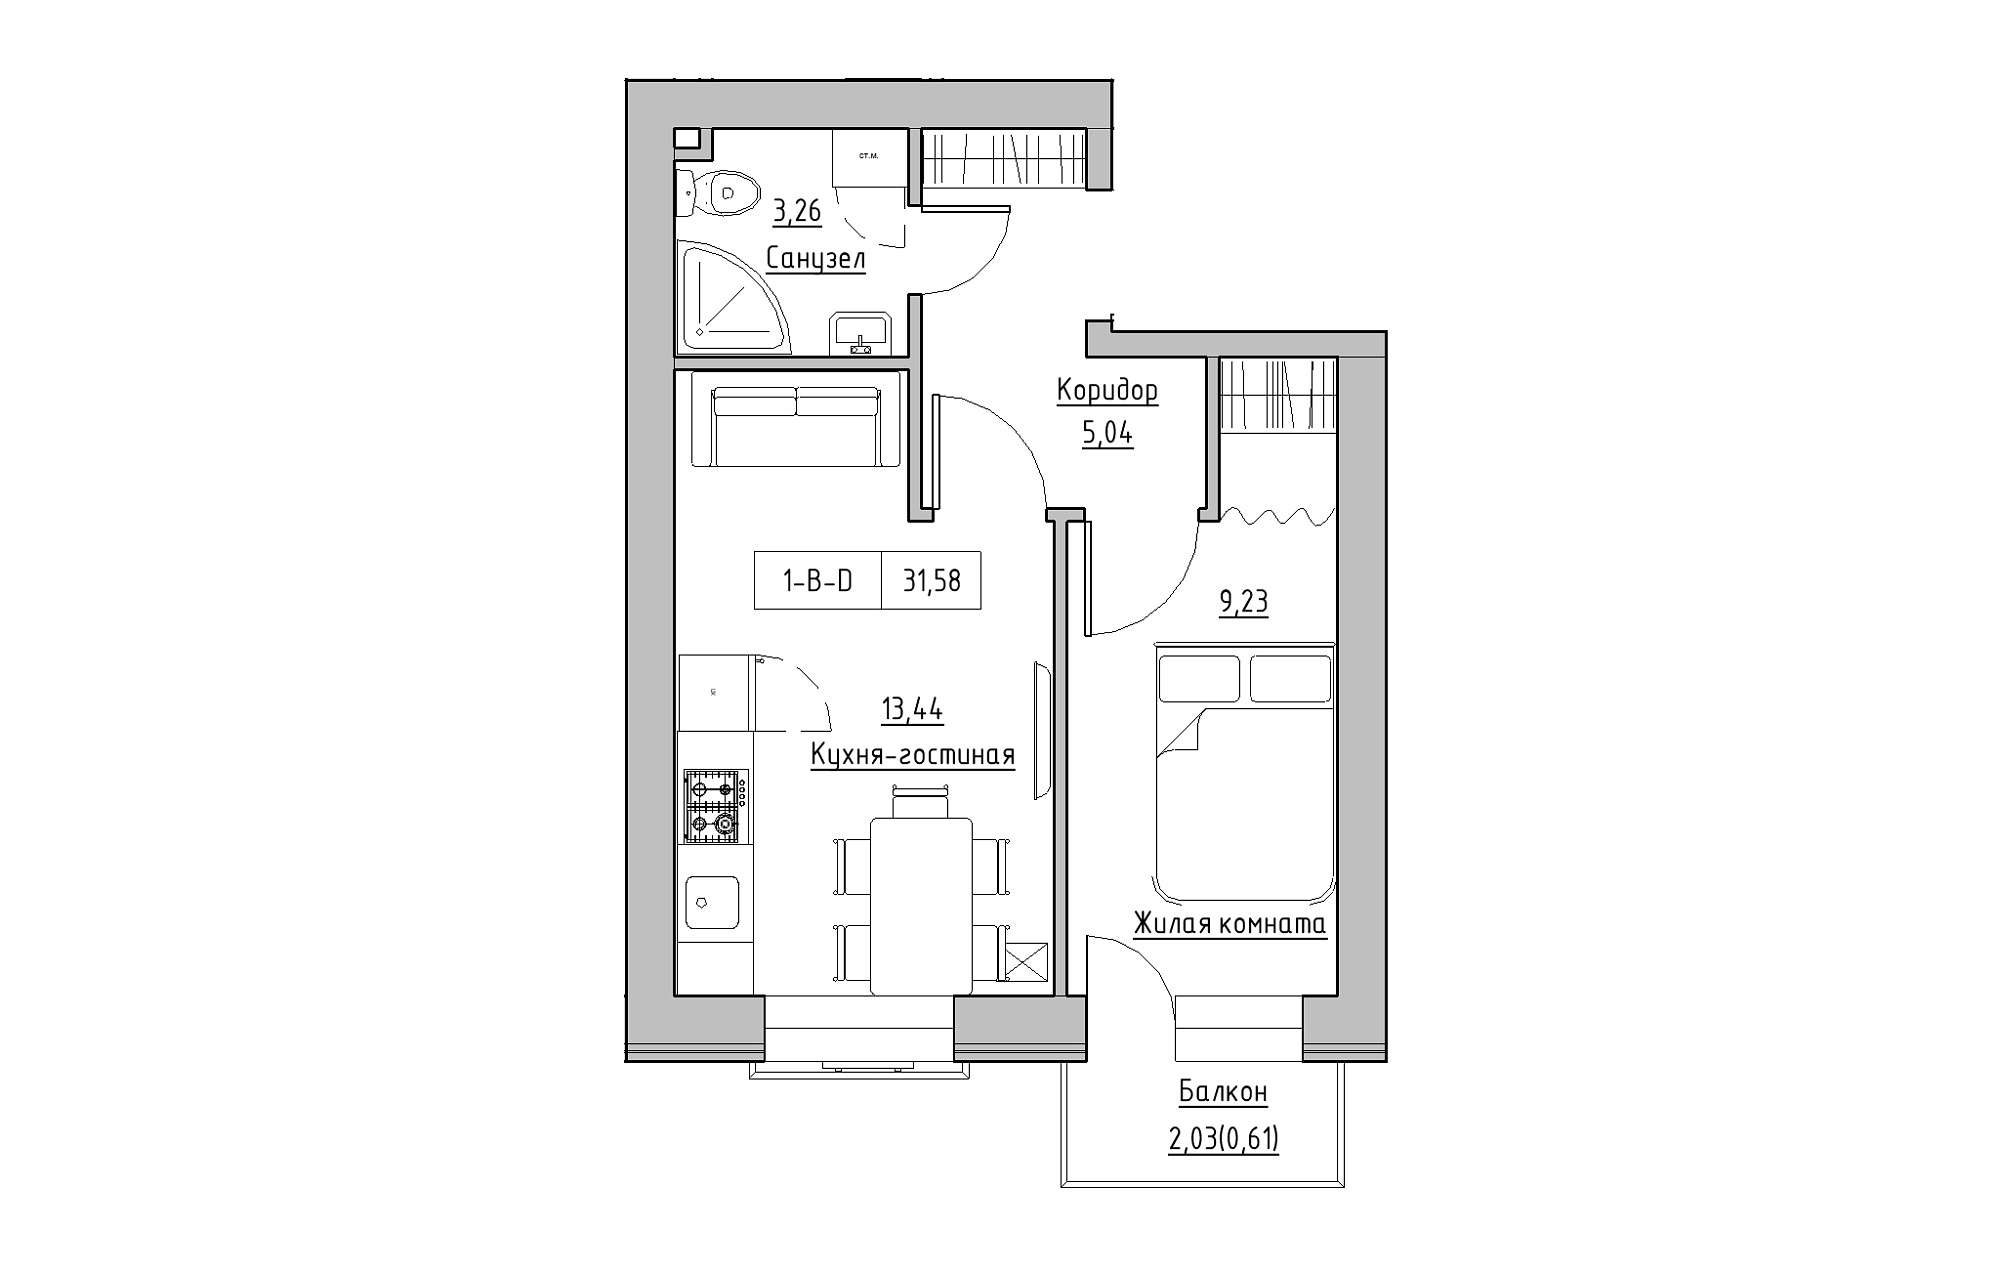 Planning 1-rm flats area 31.58m2, KS-018-03/0003.